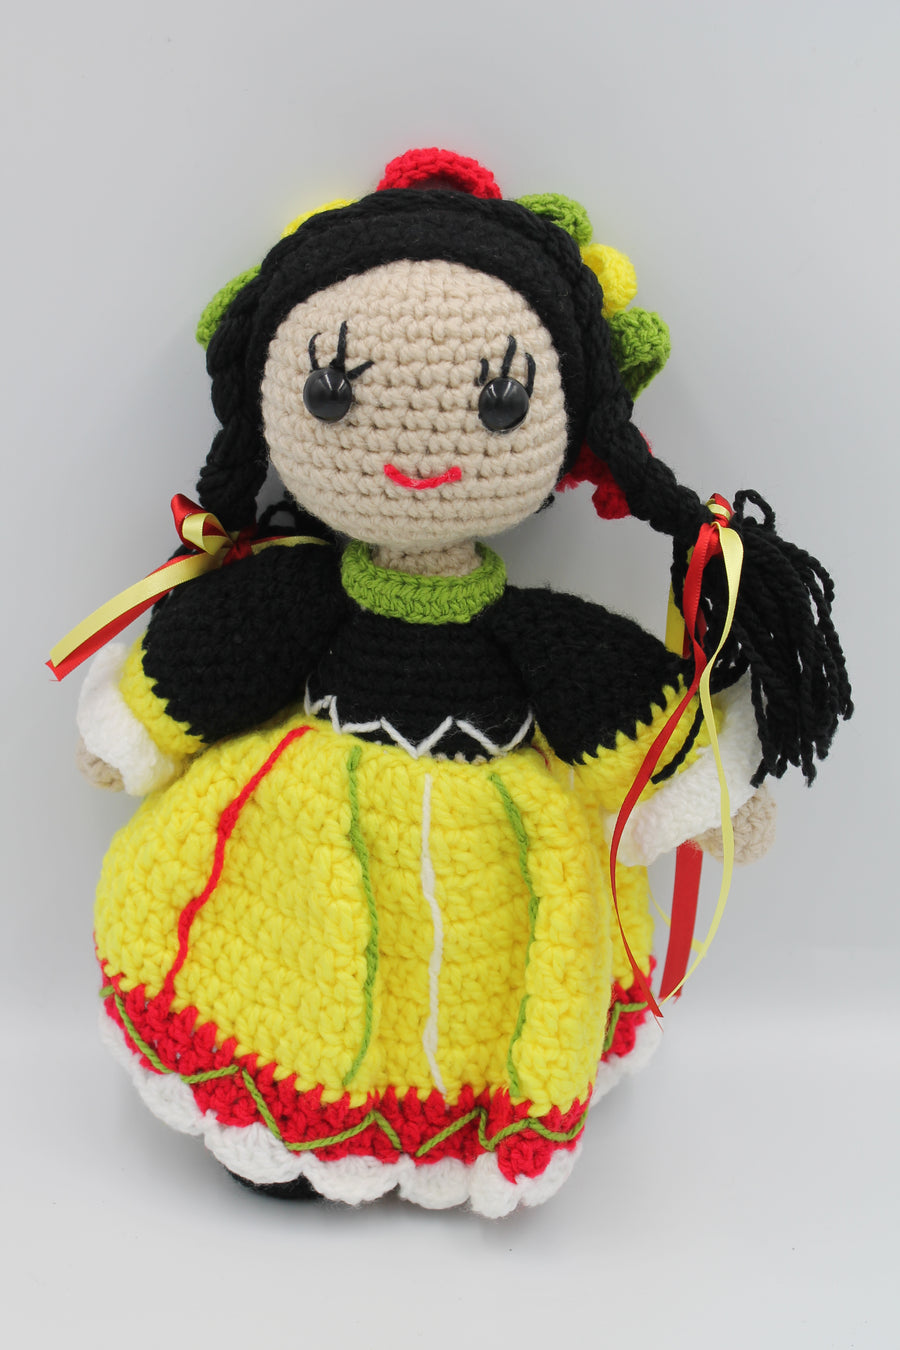 Crochet doll - Yellow dress